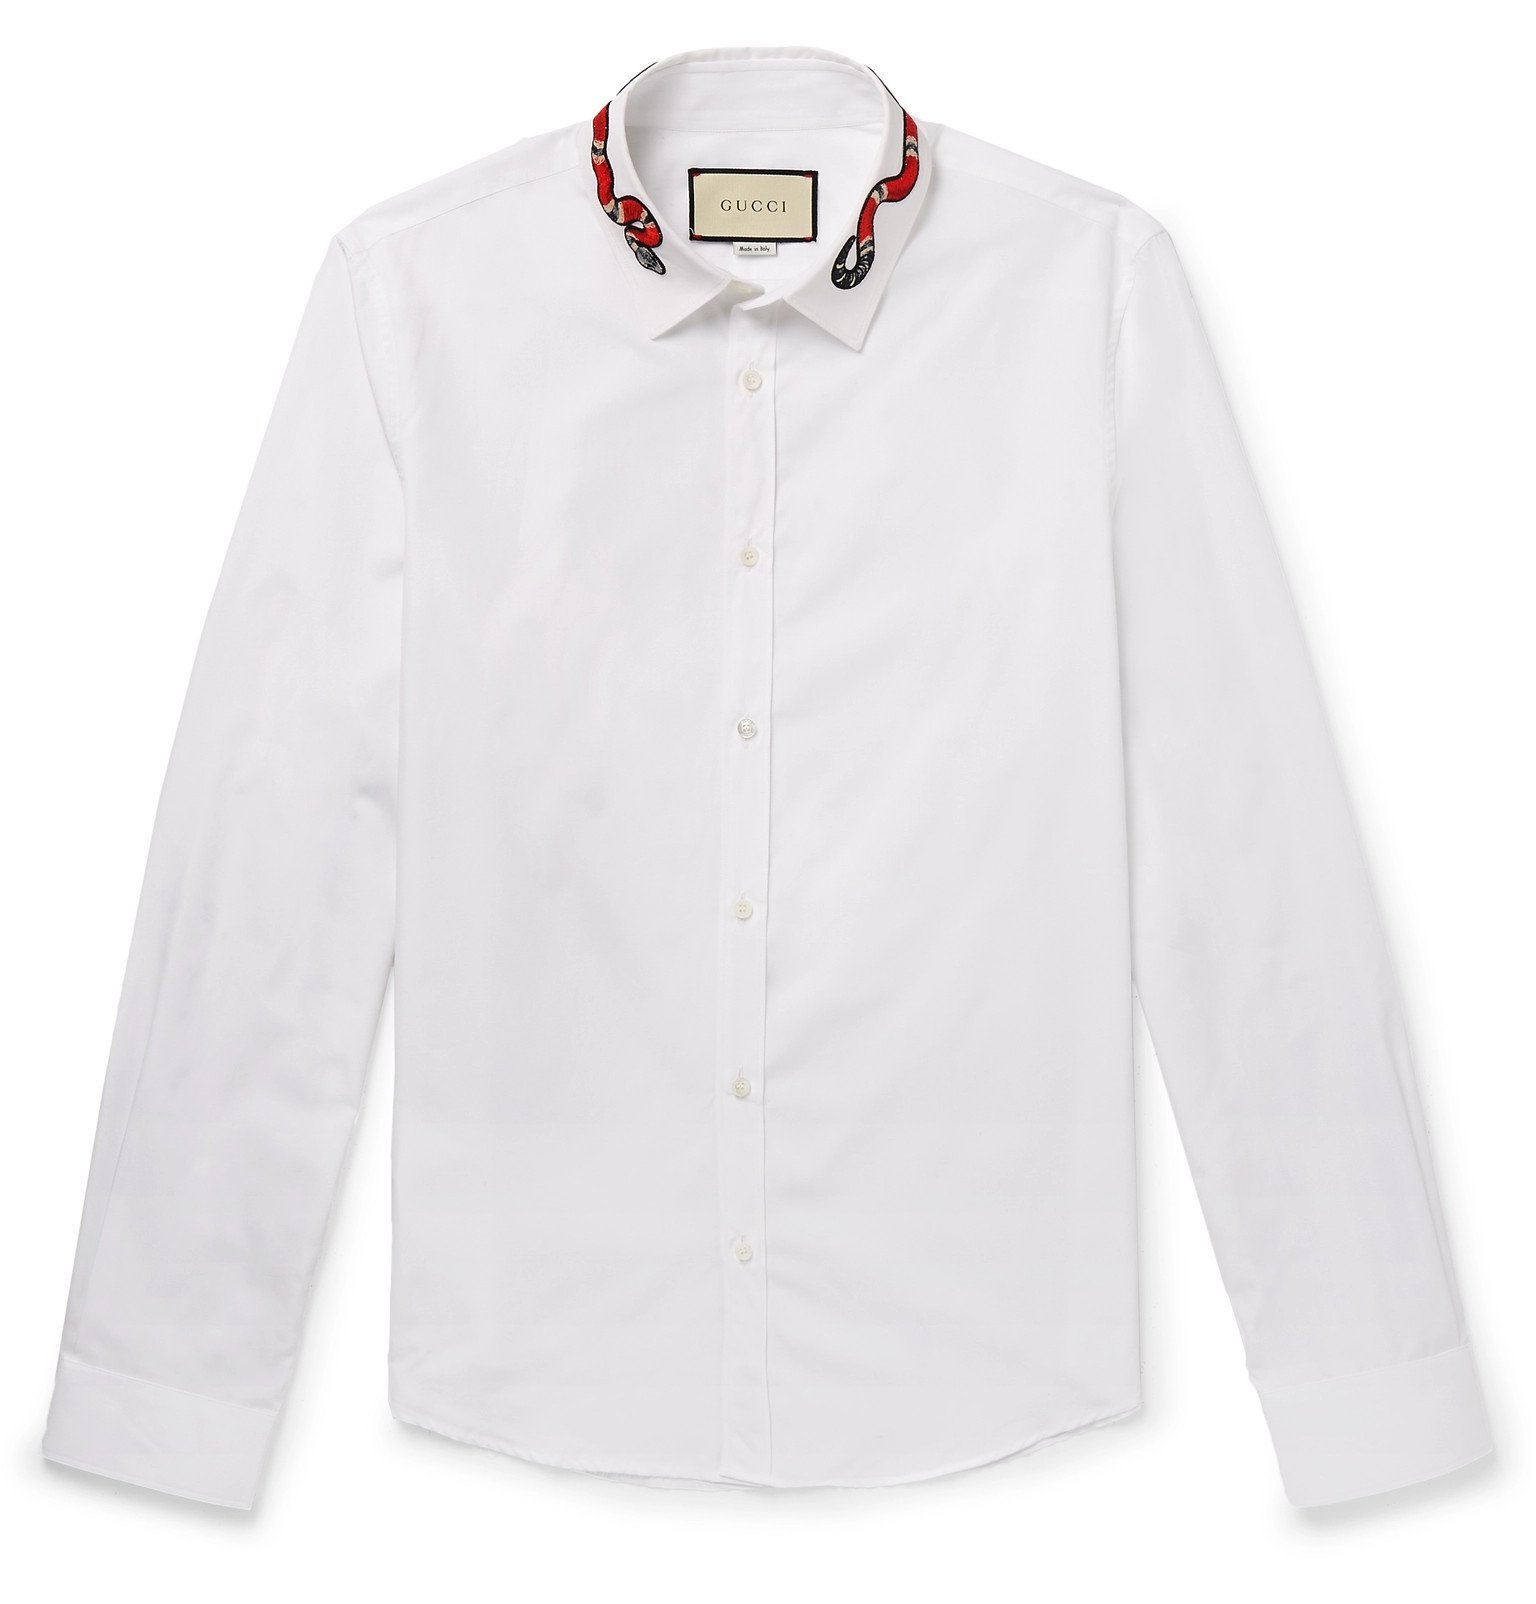 Gucci - Duke Appliquéd Cotton Oxford Shirt - White Gucci